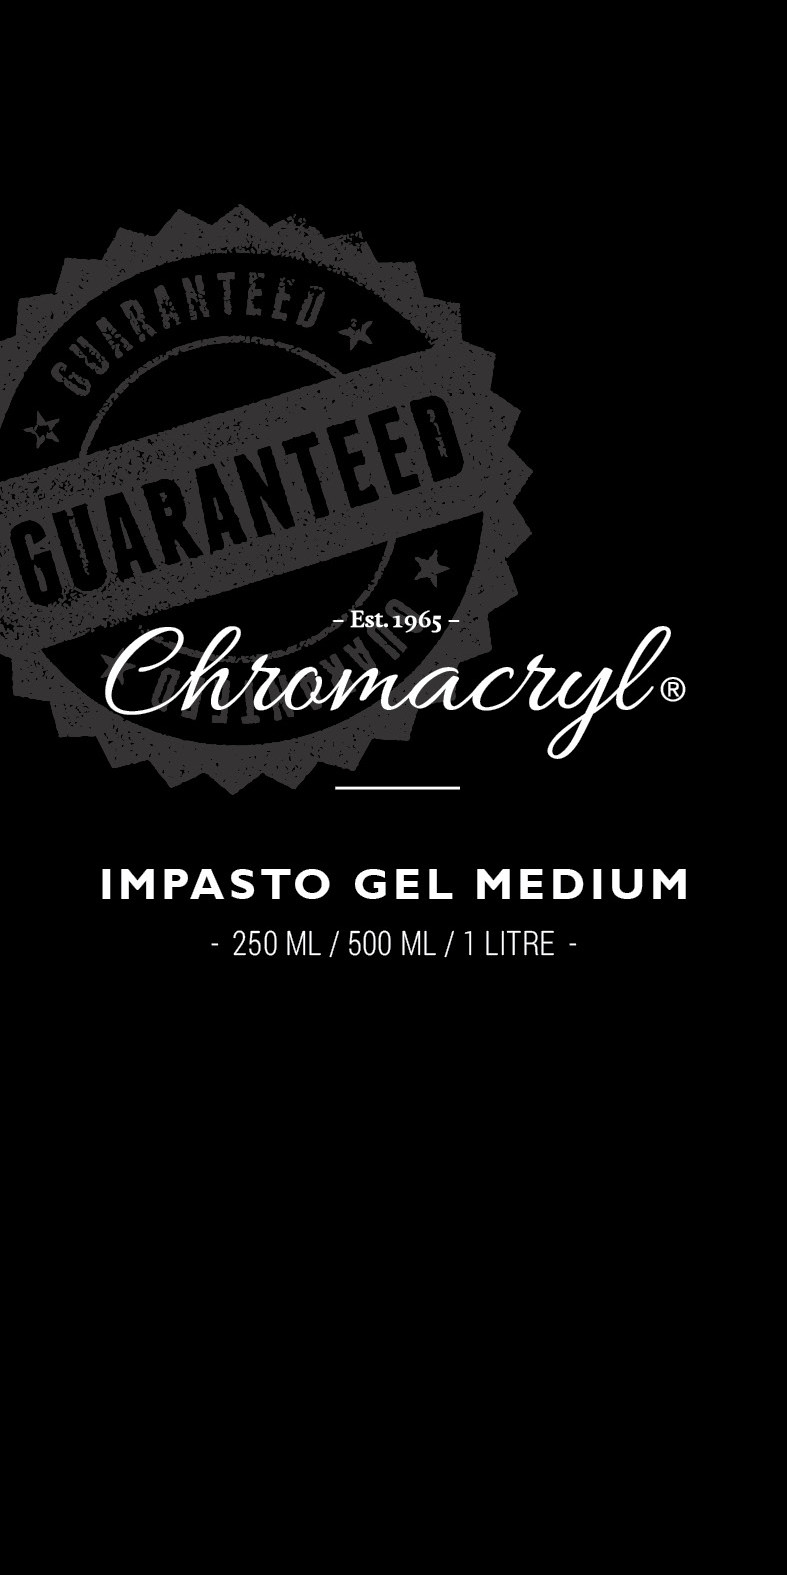 Chromacryl: Impasto Gel Medium